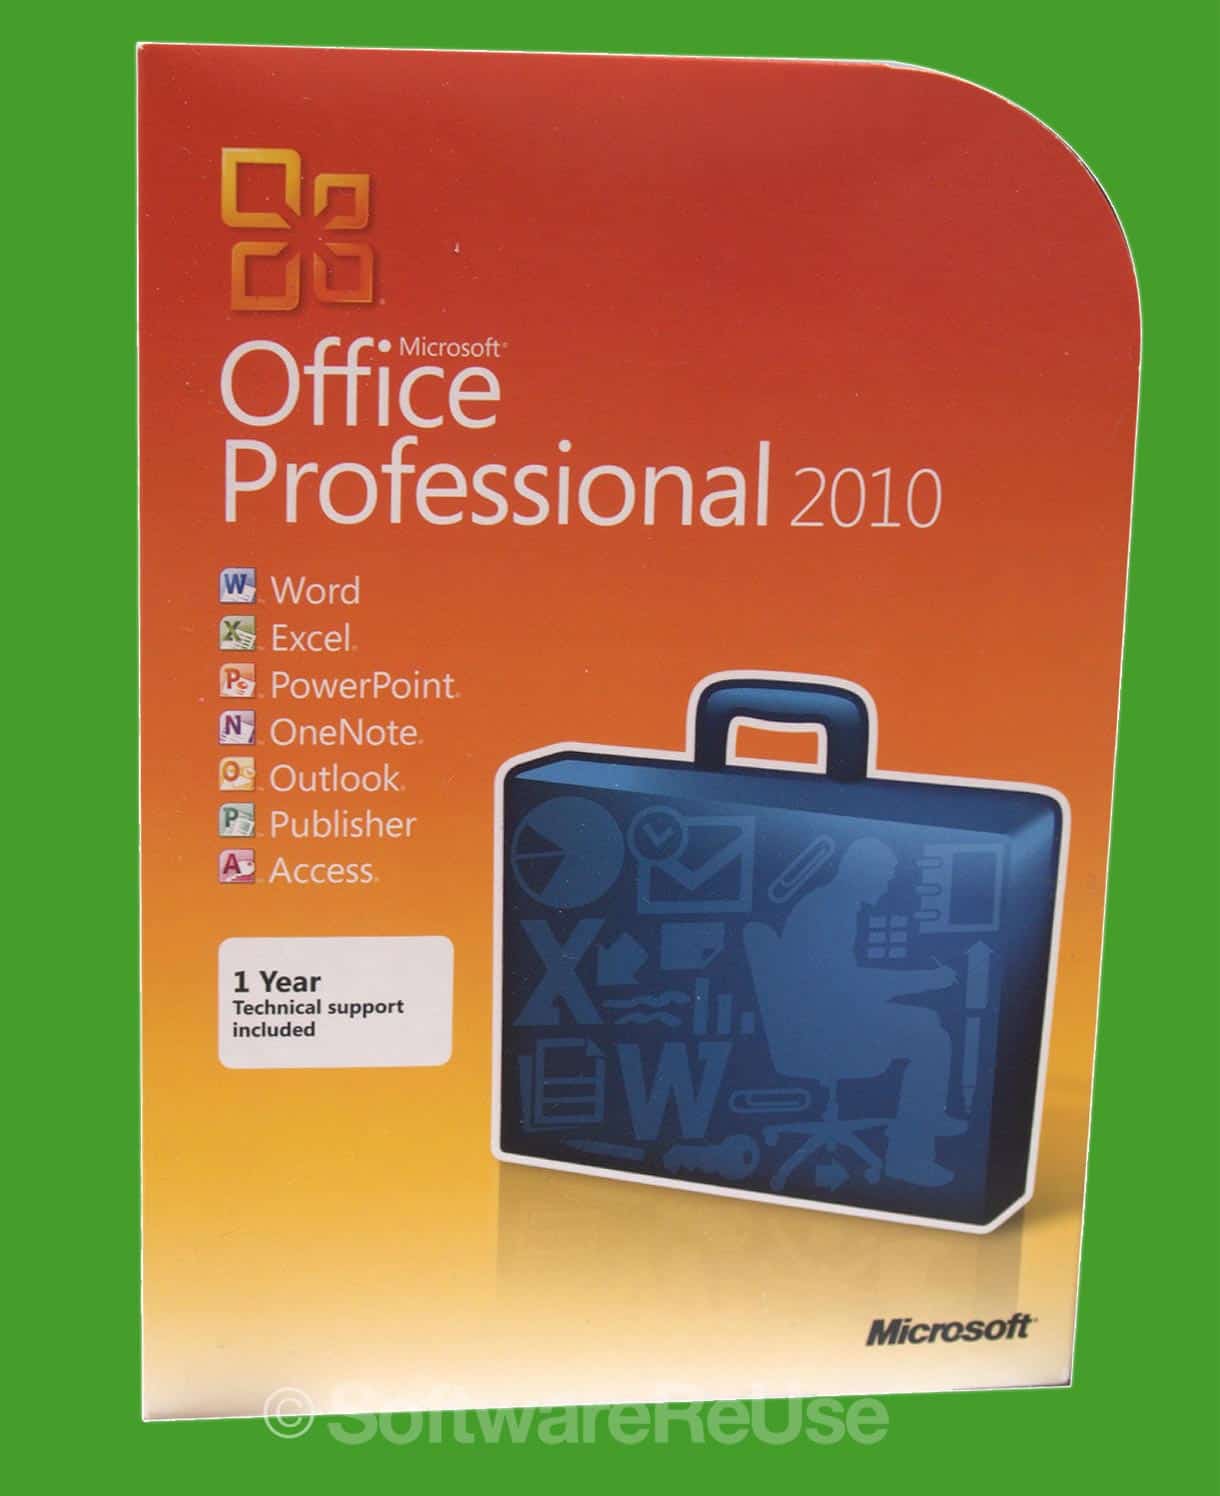 Microsoft Office Professional 2010 FPP englisch Original